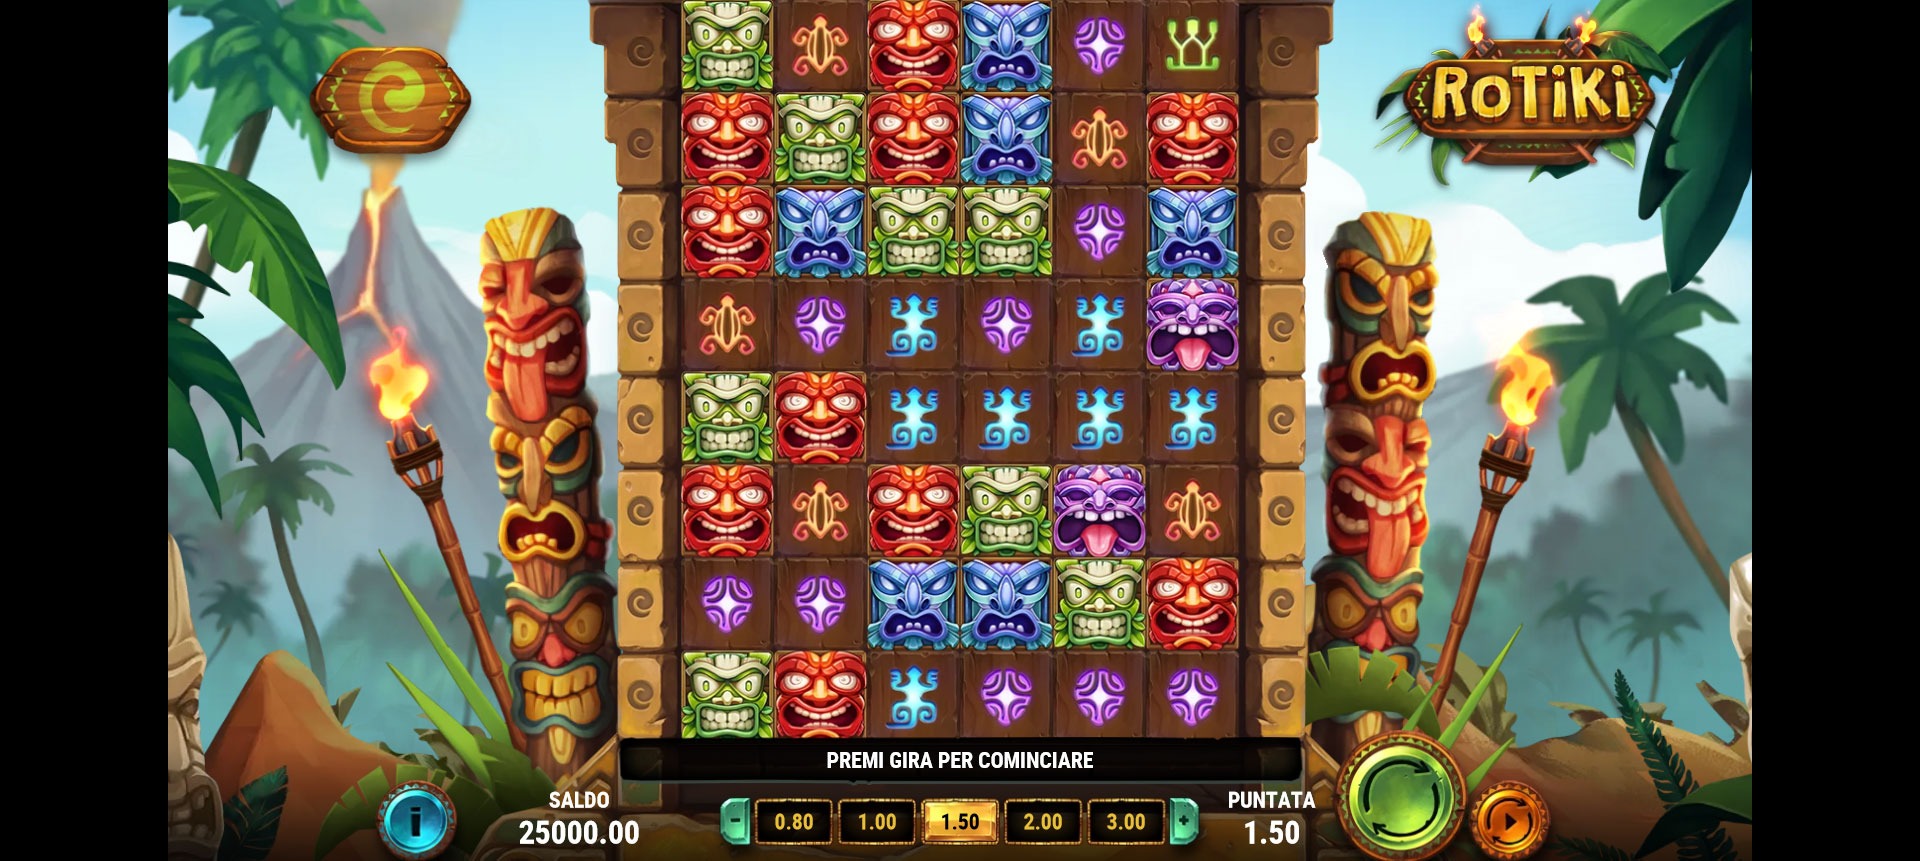 schermata del gioco slot machine rotiki